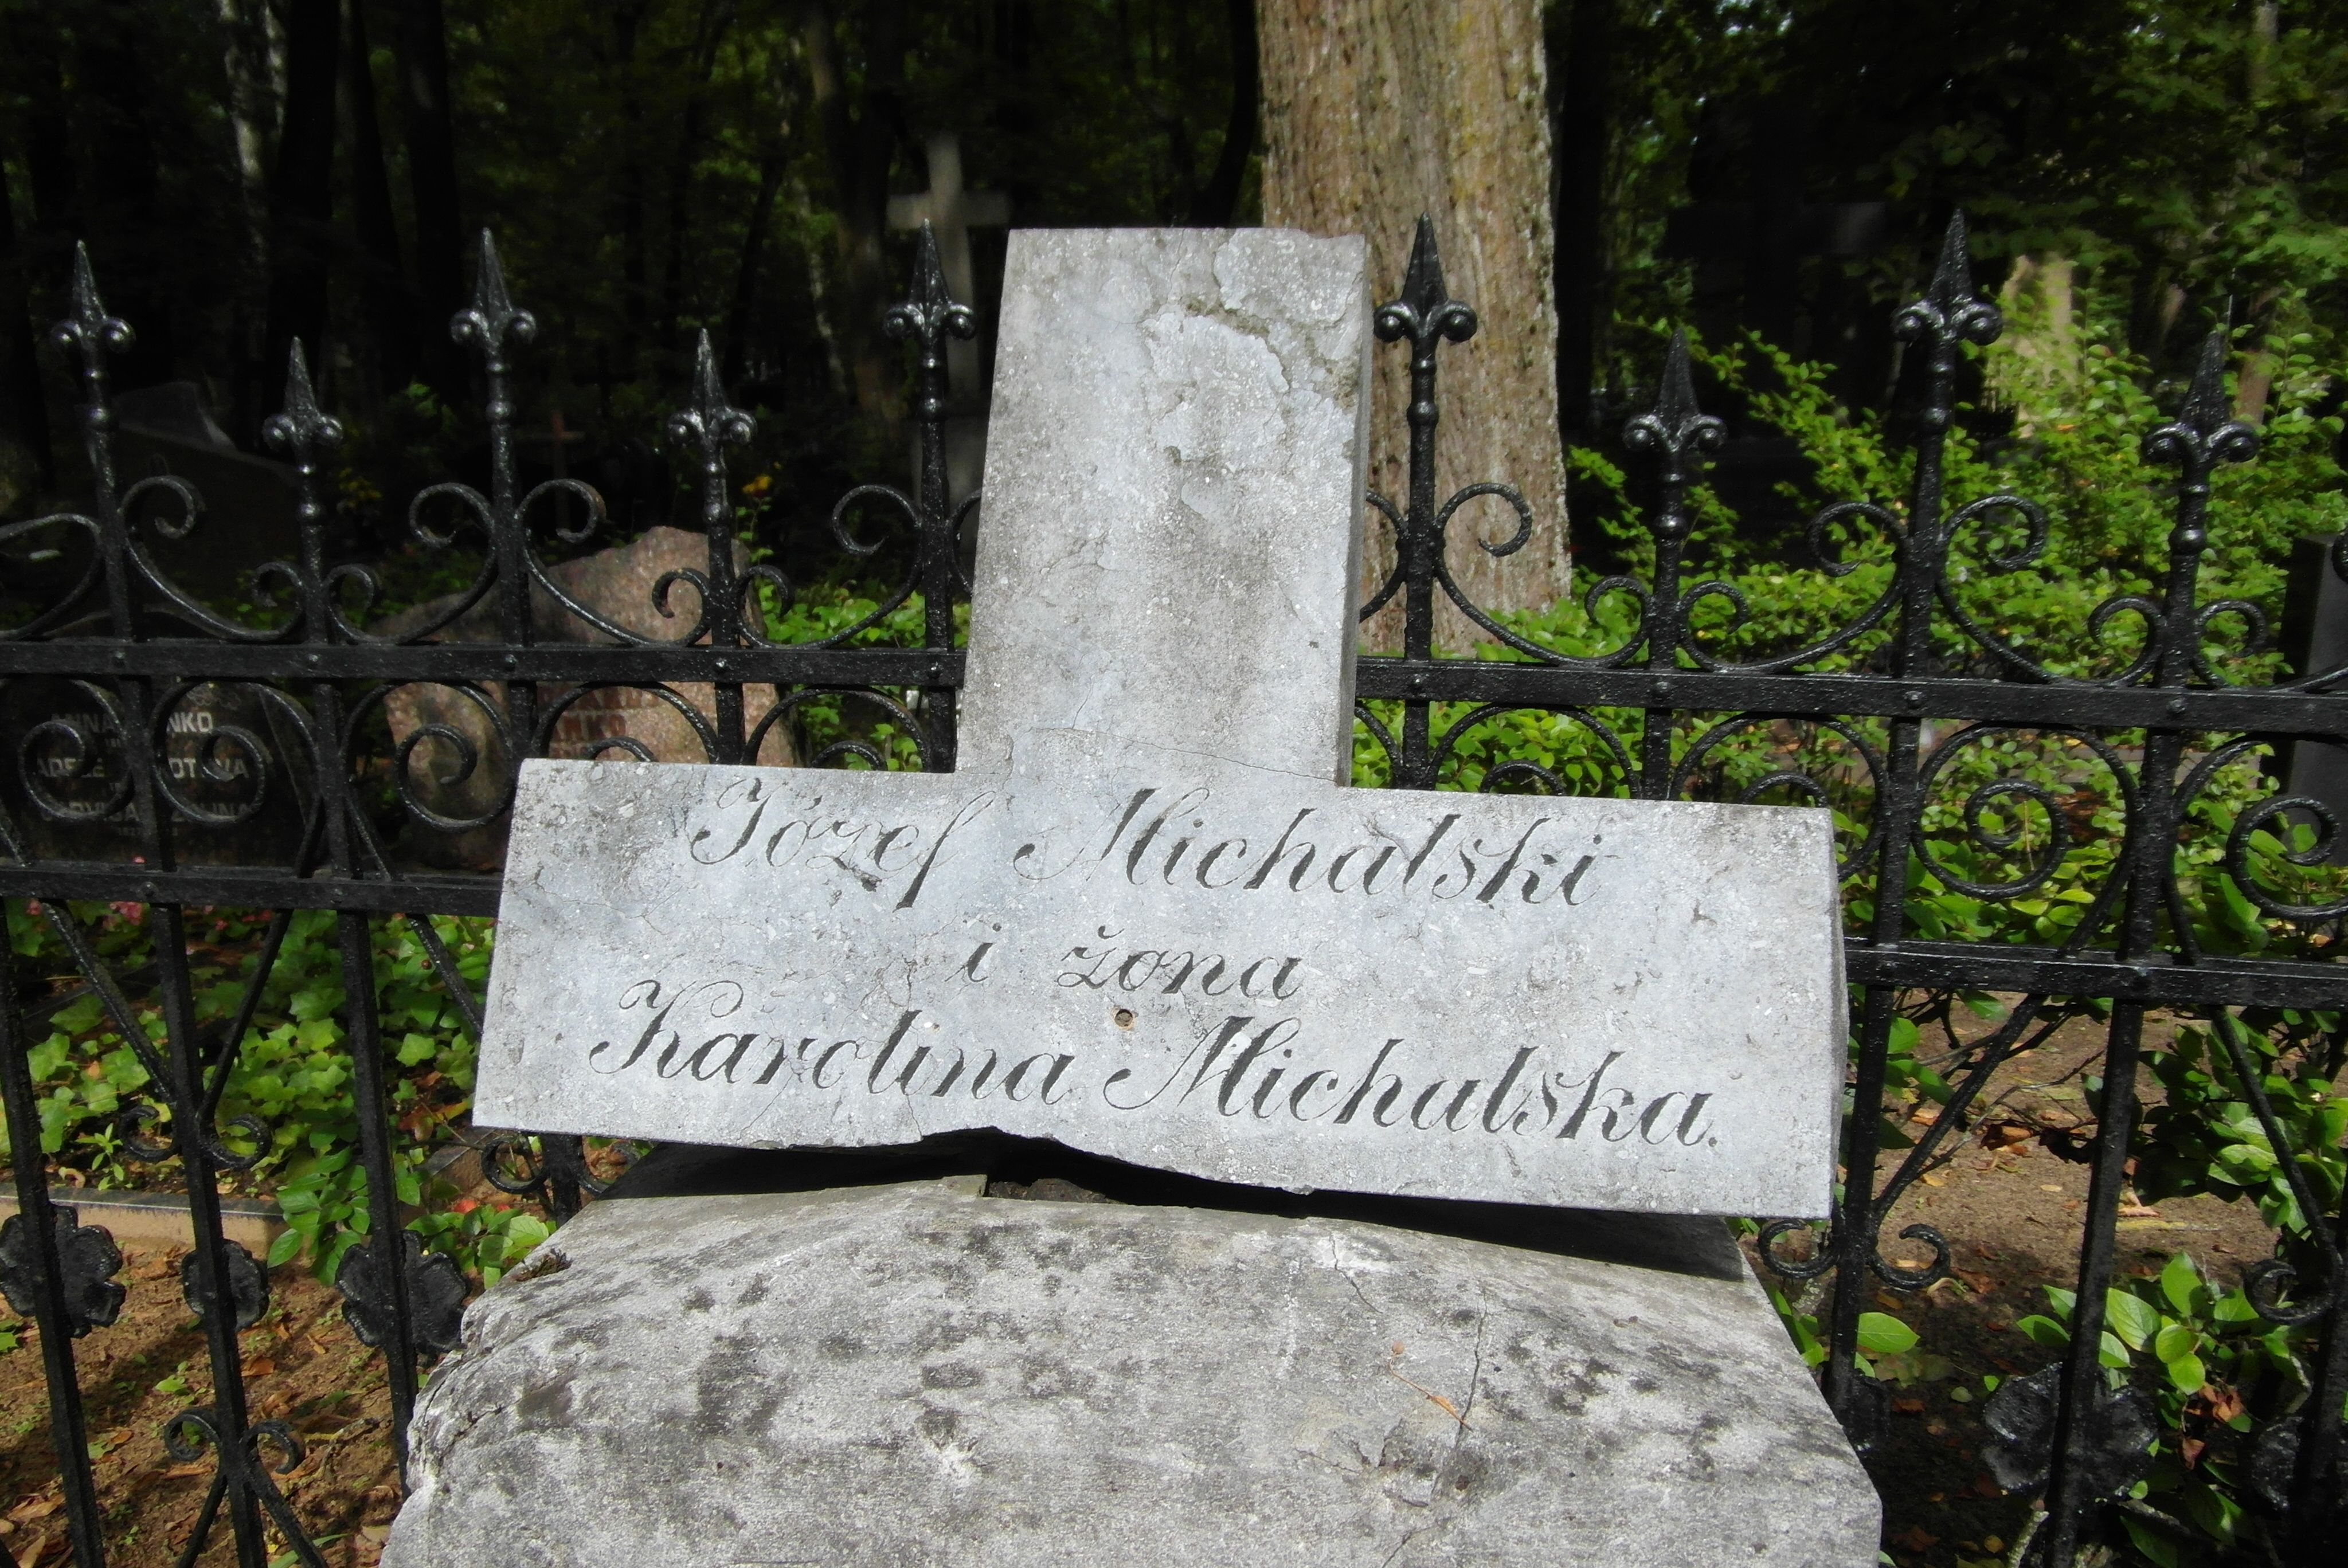 Inscription from the gravestone of Jozef Michalski, Karolina Michalska, St Michael's cemetery in Riga, as of 2021.